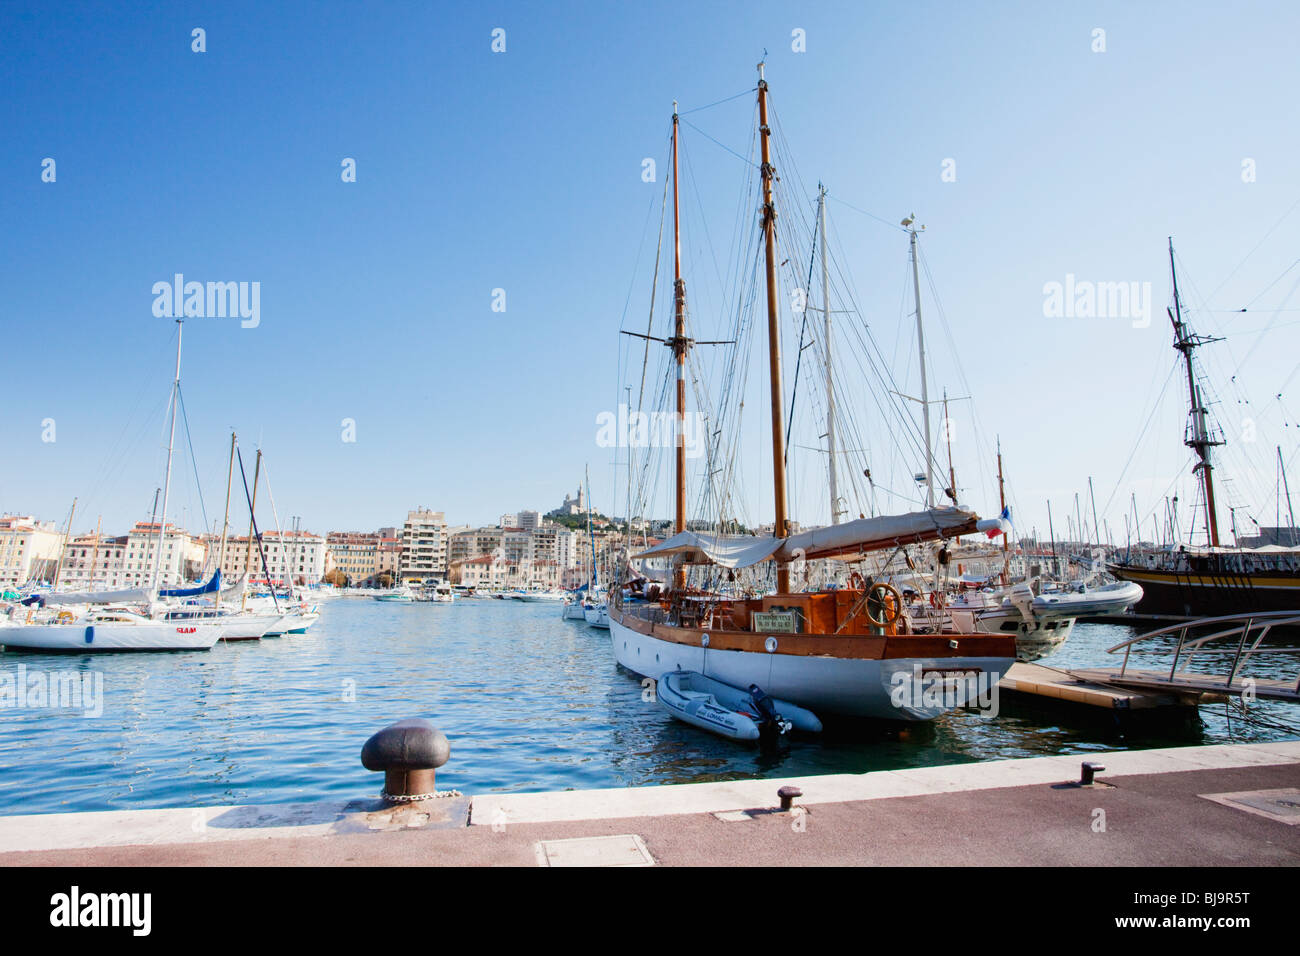 Ships in port Stock Photo - Alamy